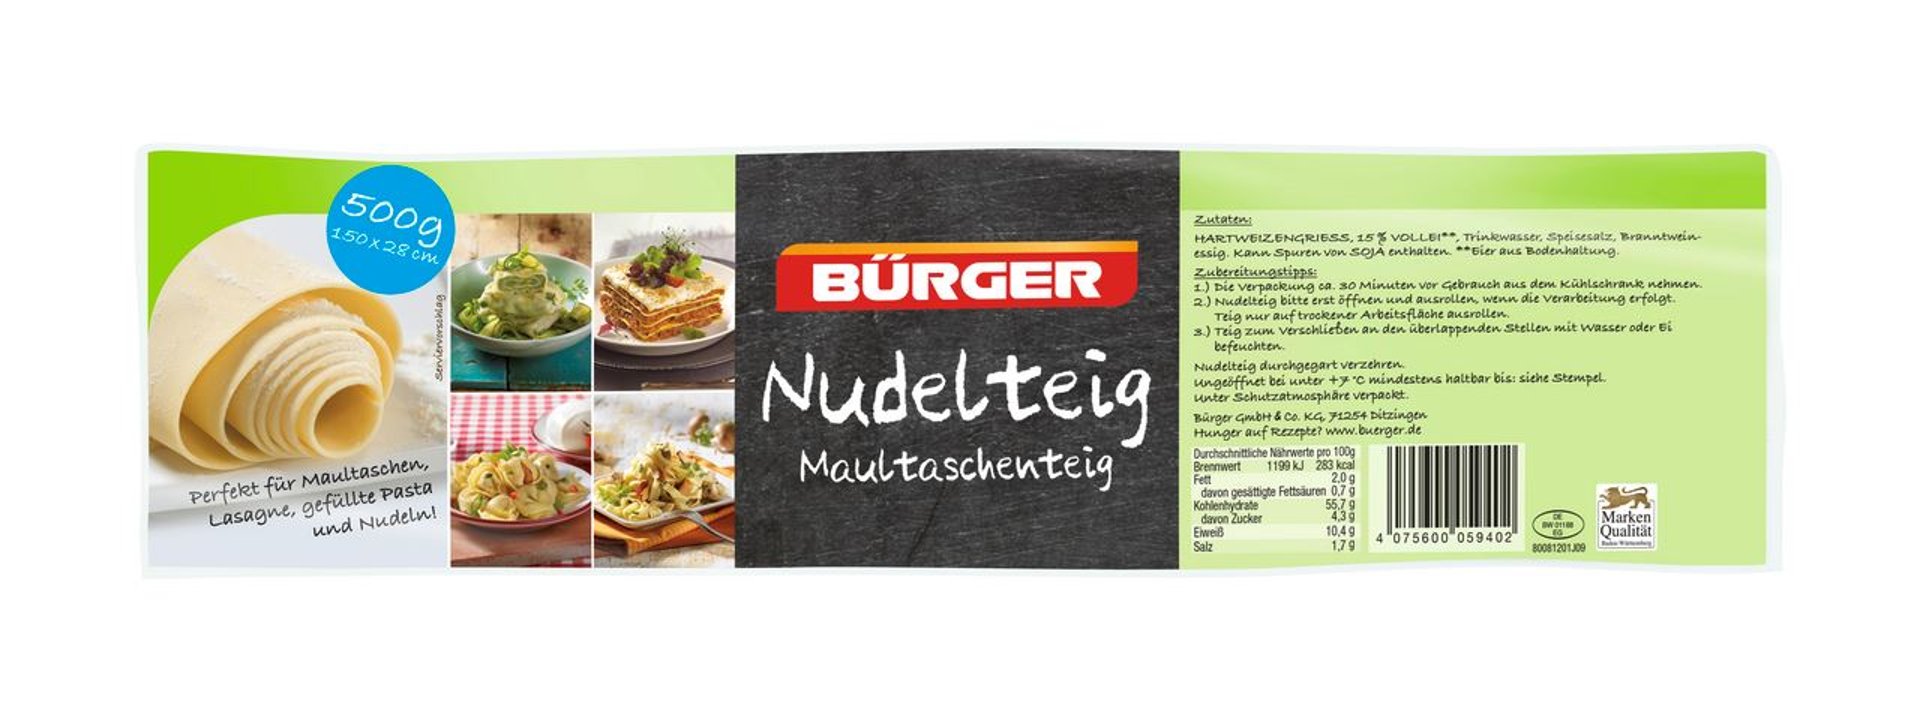 Bürger - Nudel- & Maultaschenteig - 500 g Beutel